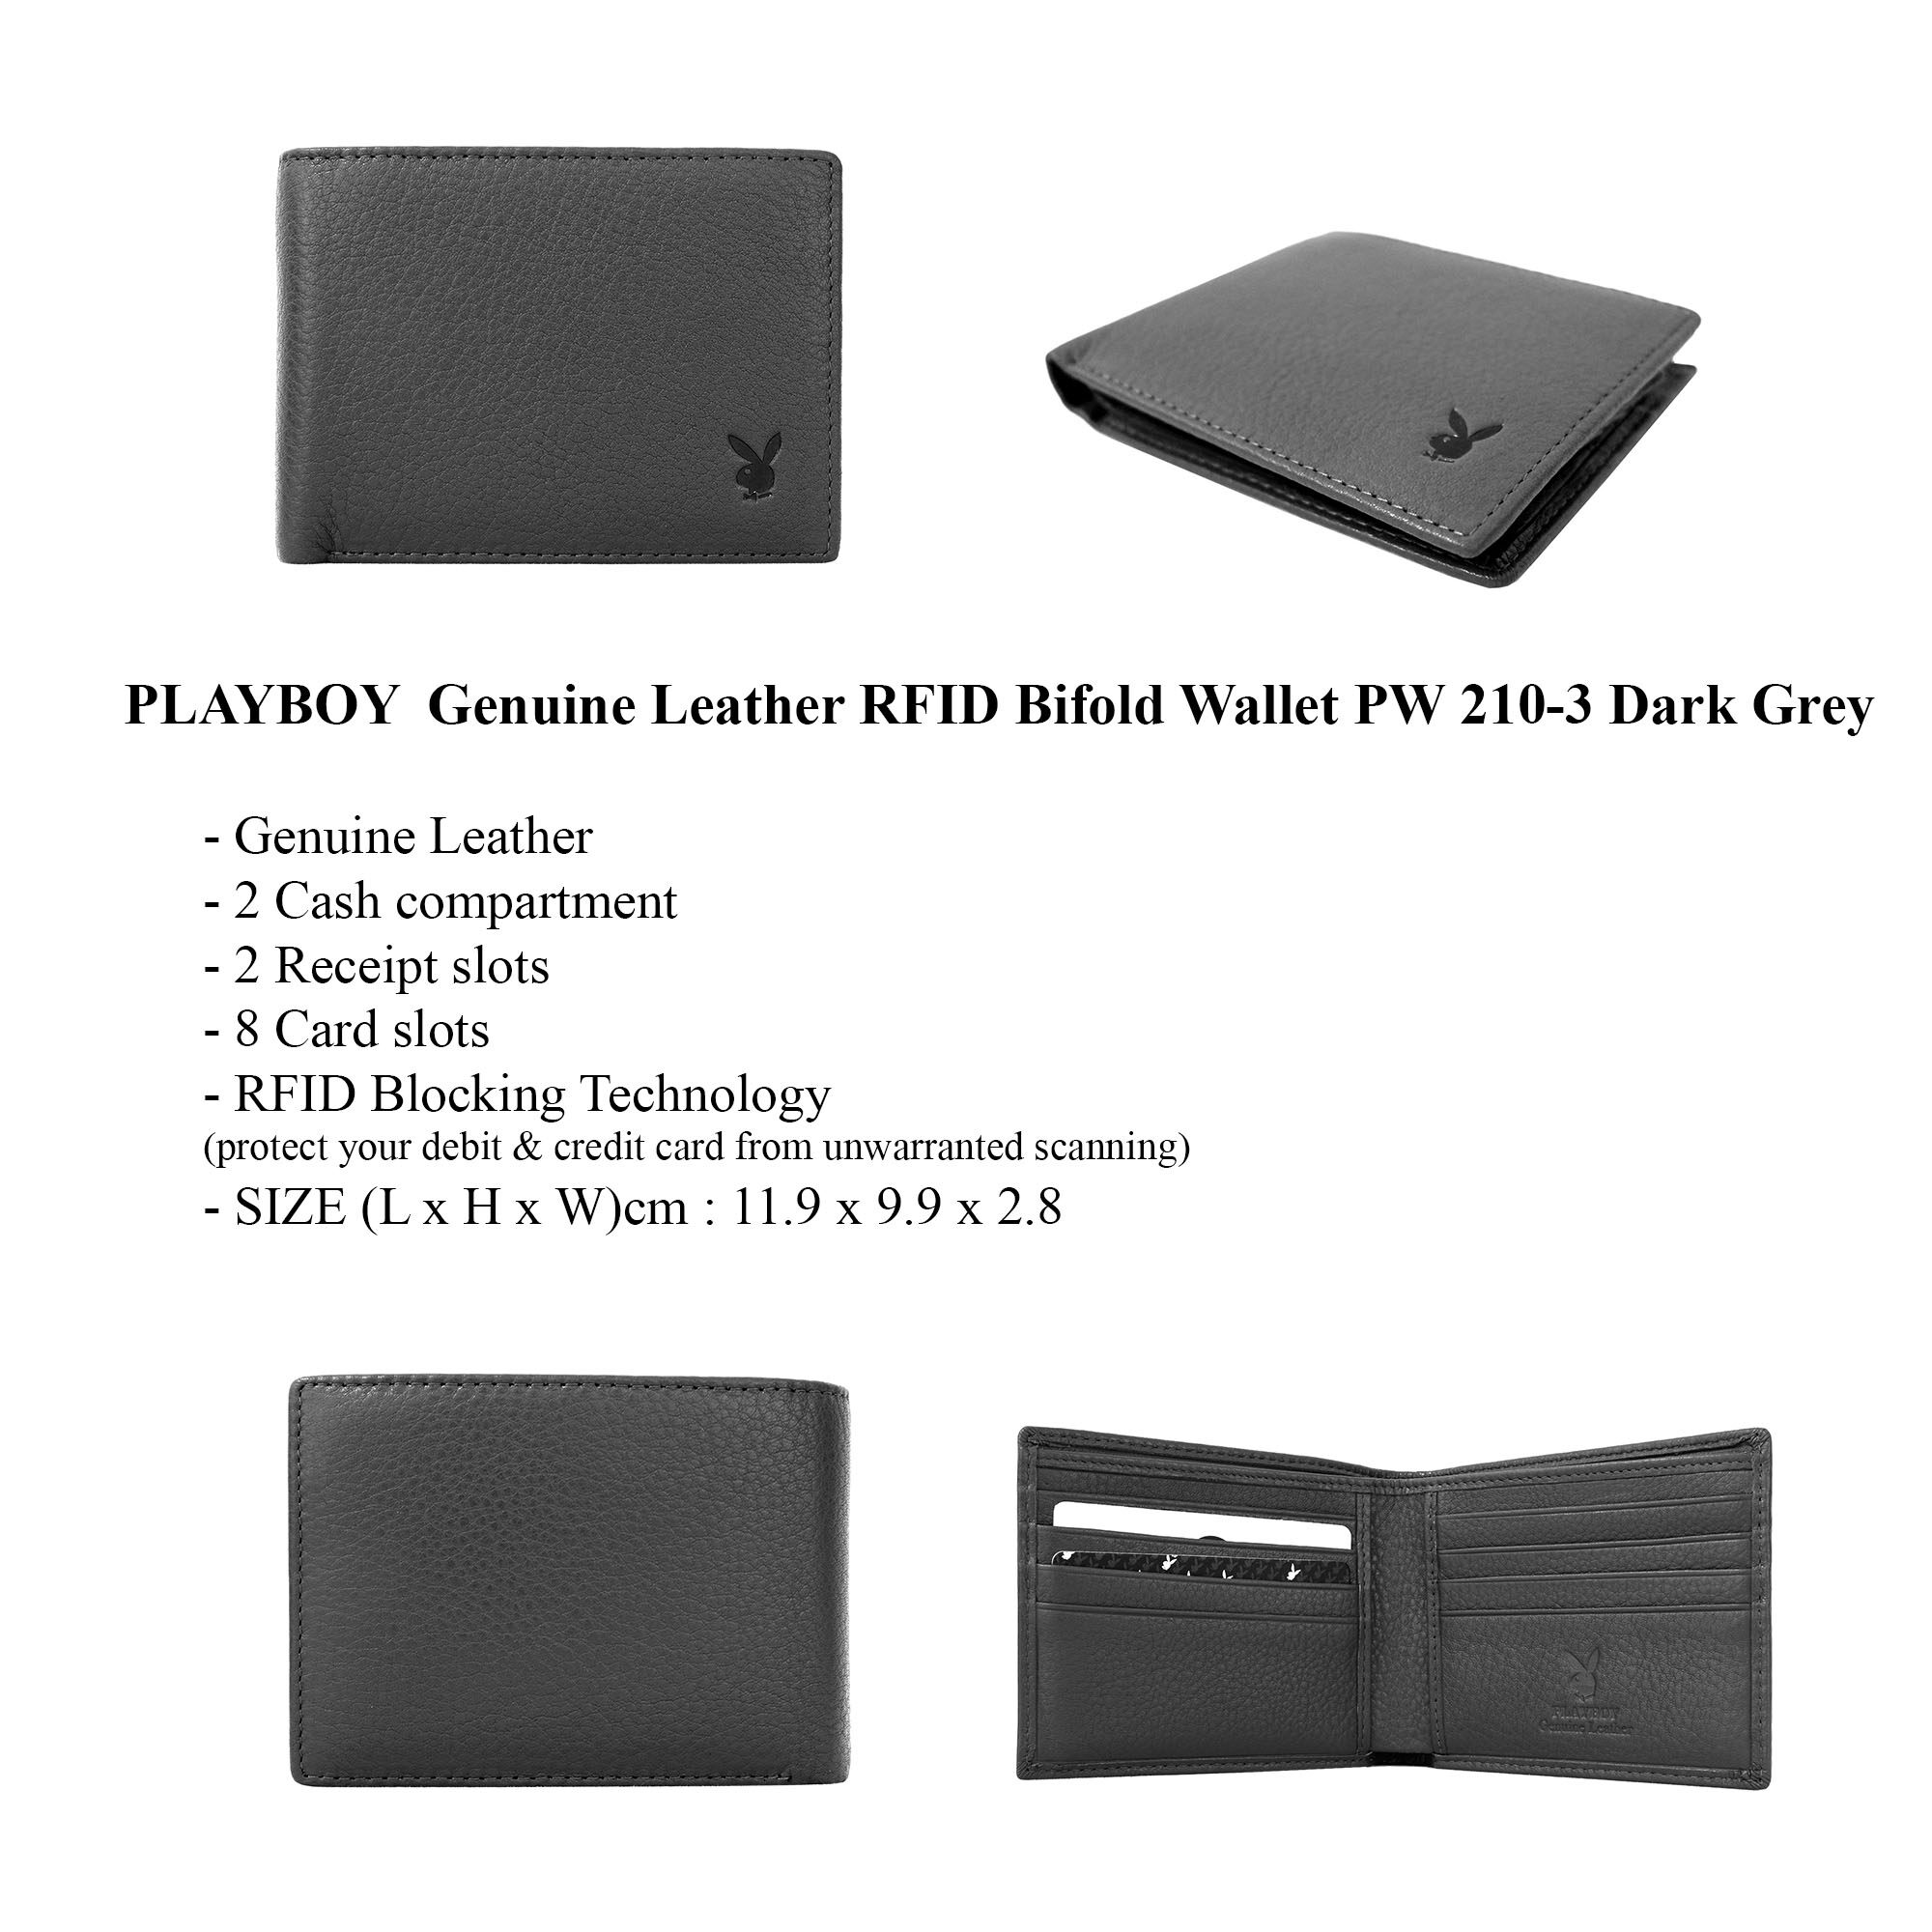 Playboy Genuine Leather RFID Long Wallet / Bifold Wallet PW 210 Dark Grey